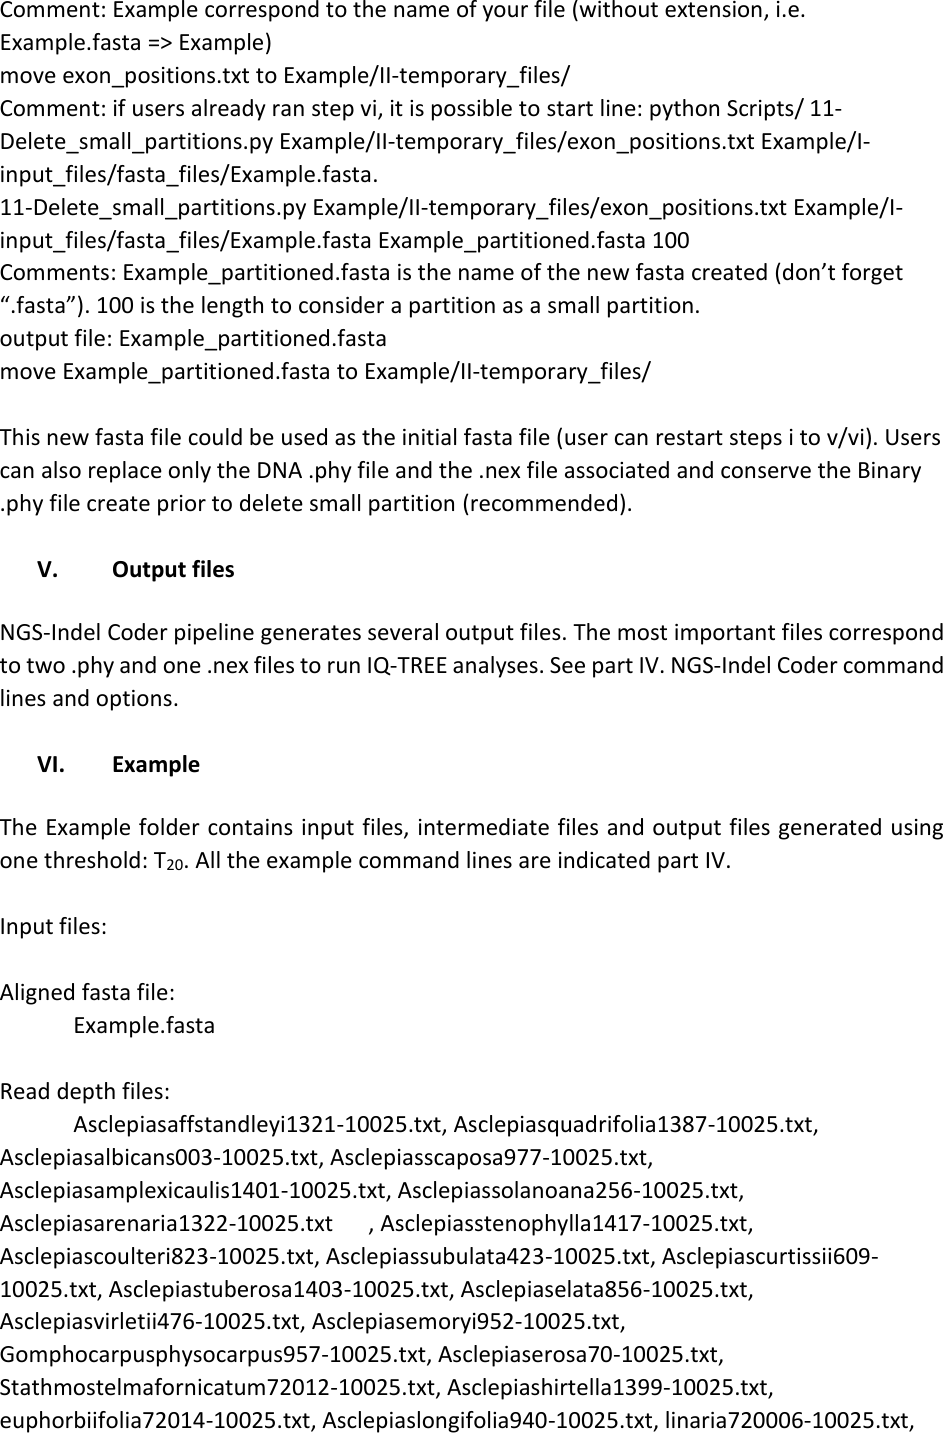 Page 9 of 10 - NGS-Indel Coder Manual